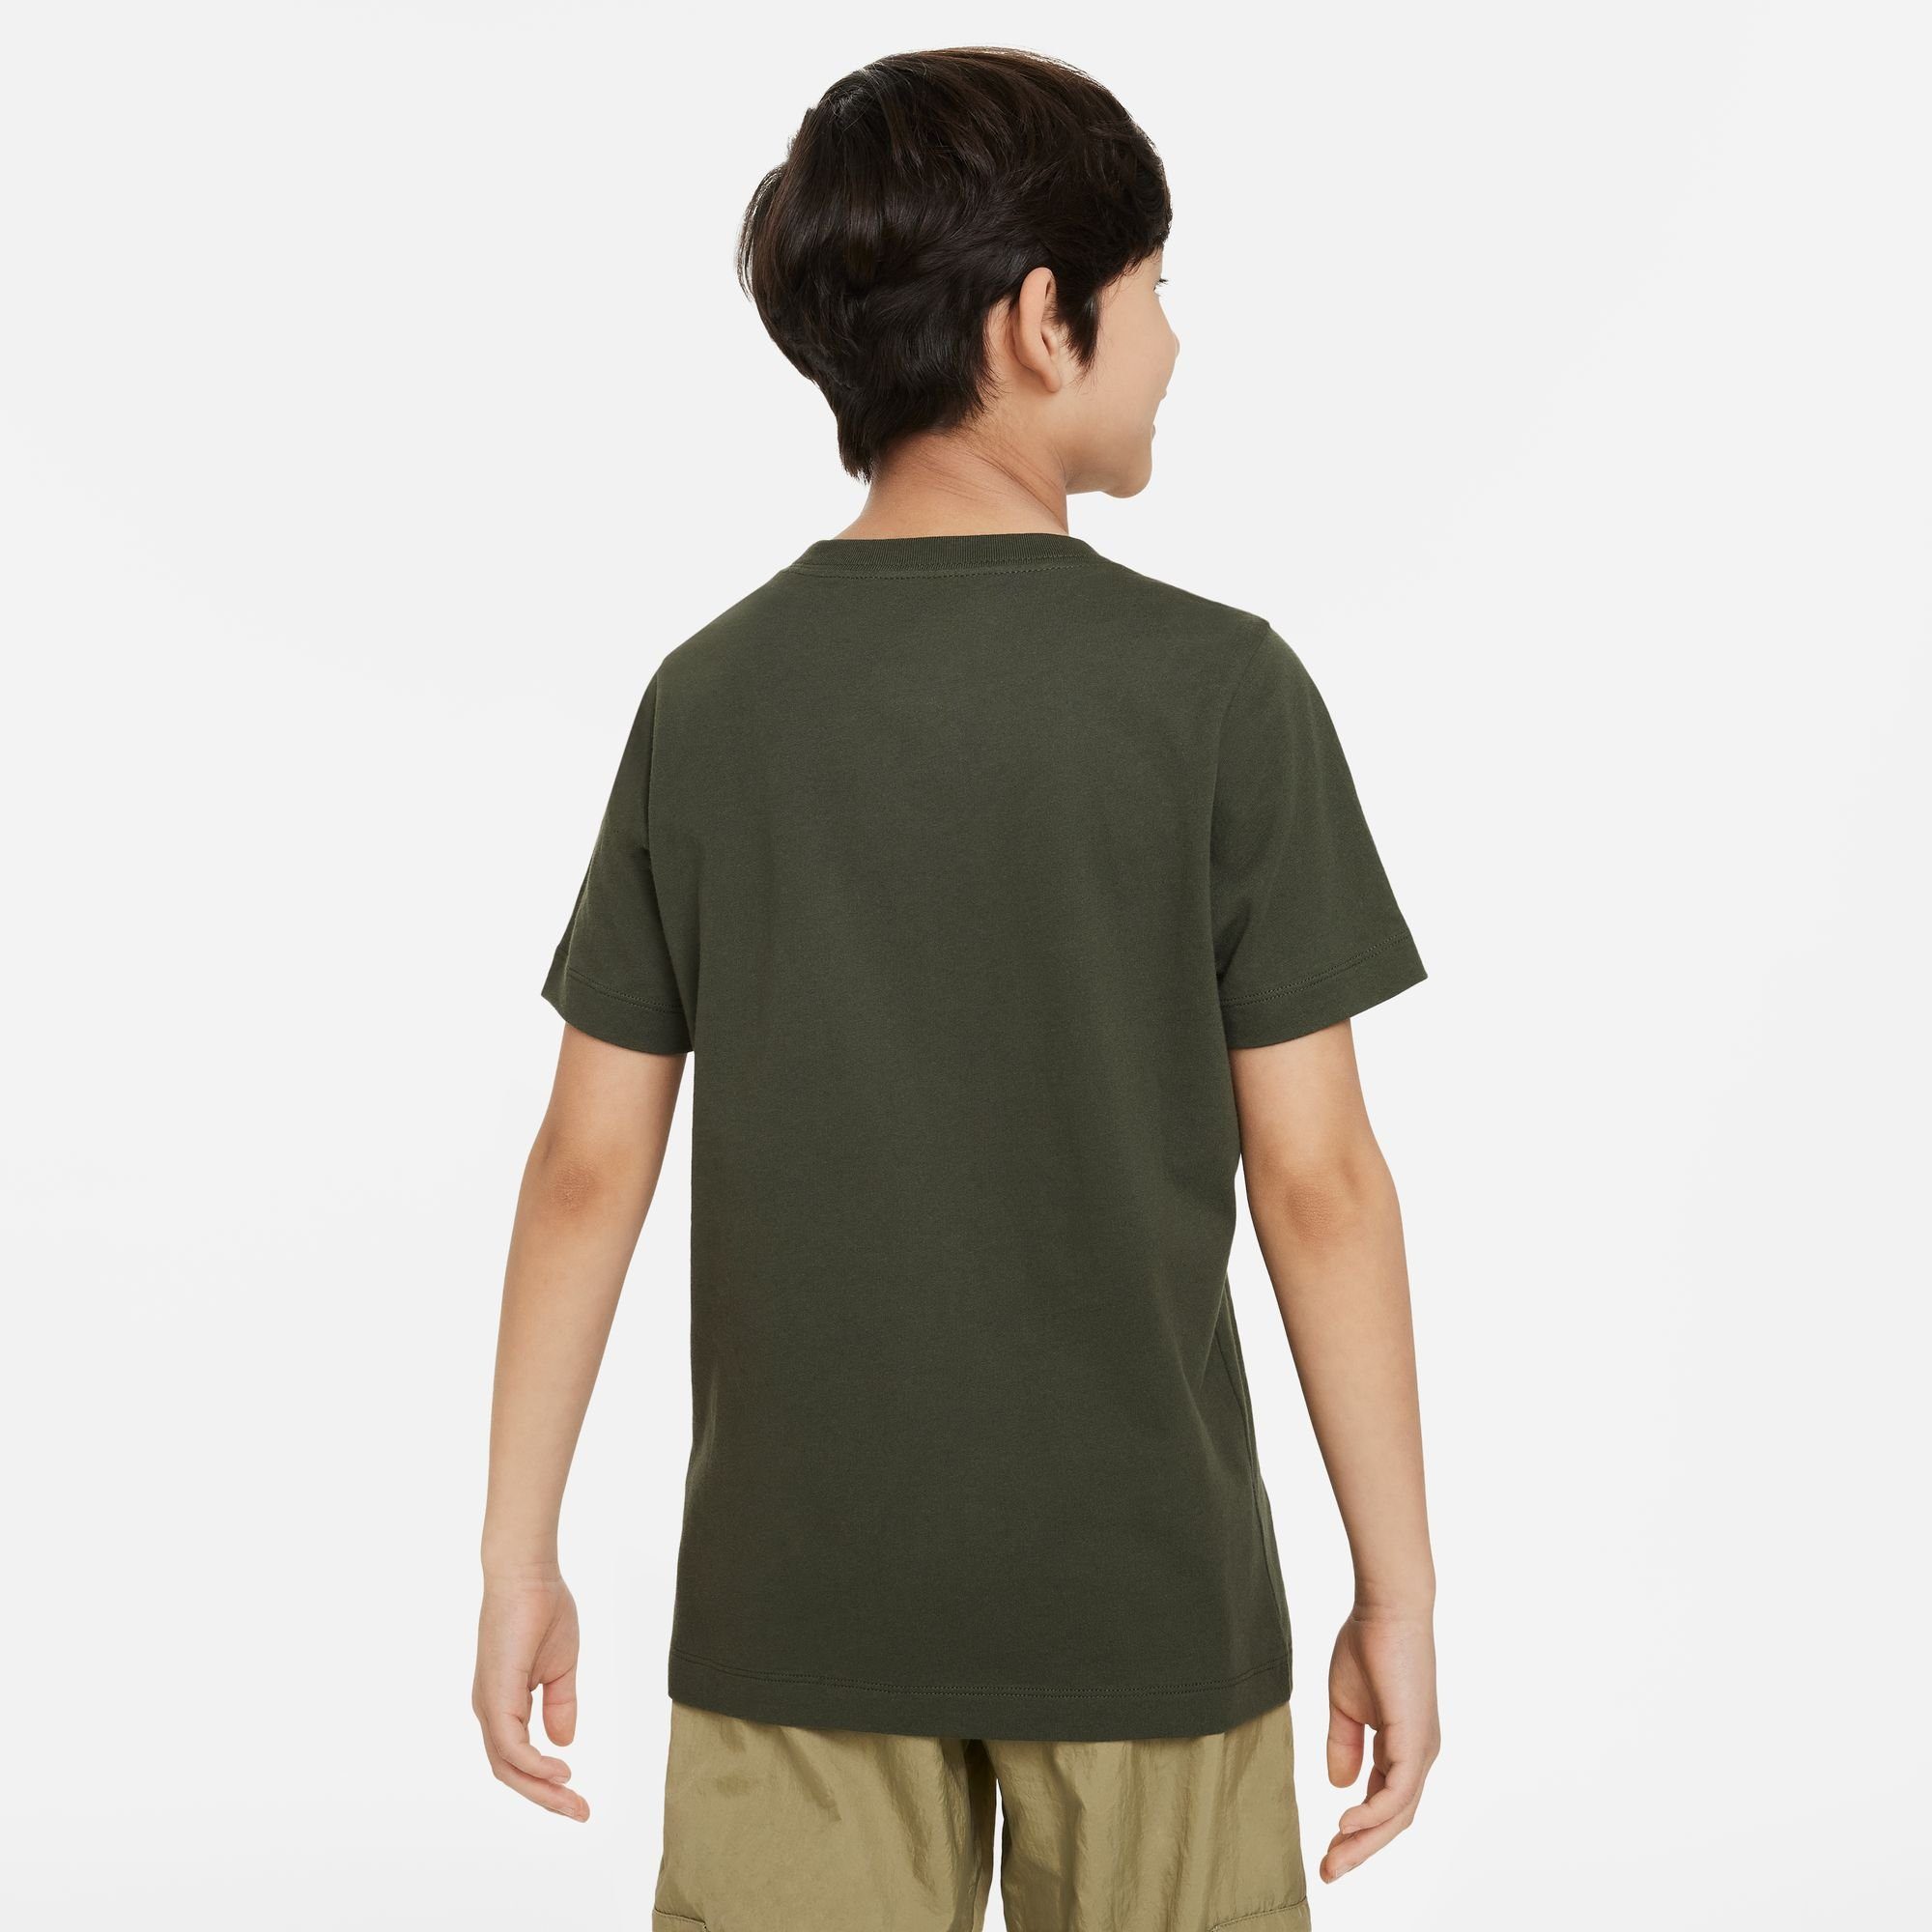 T-SHIRT BIG T-Shirt CARGO Sportswear KHAKI/WHITE KIDS' Nike